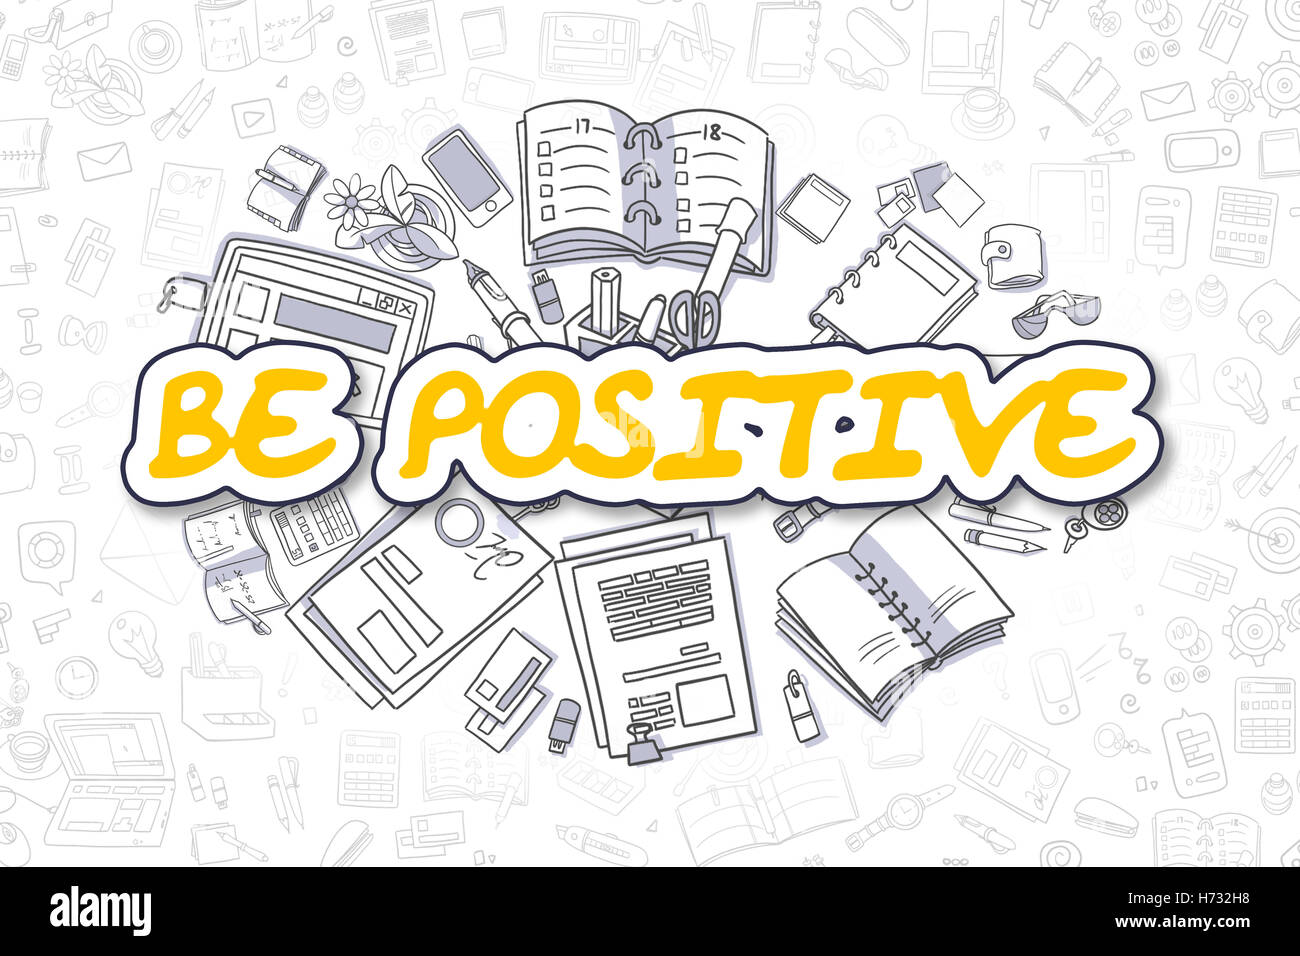 Seien Sie positiv - Doodle gelben Text. Business-Konzept. Stockfoto